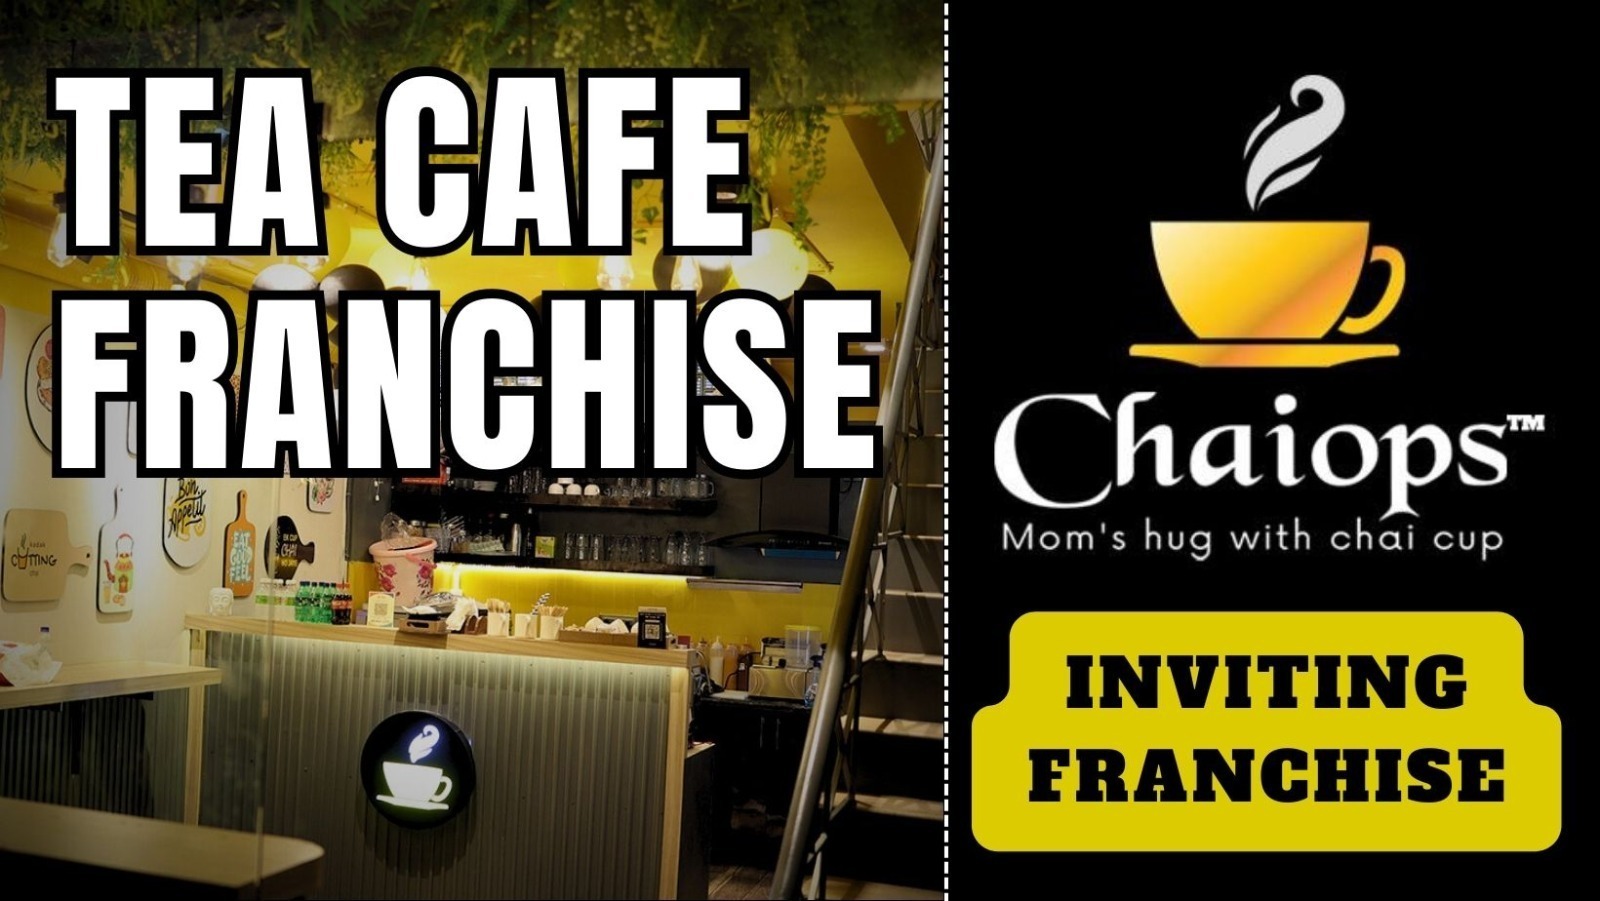 Start Chaiops Franchise Business Best Tea Cafe Franchise